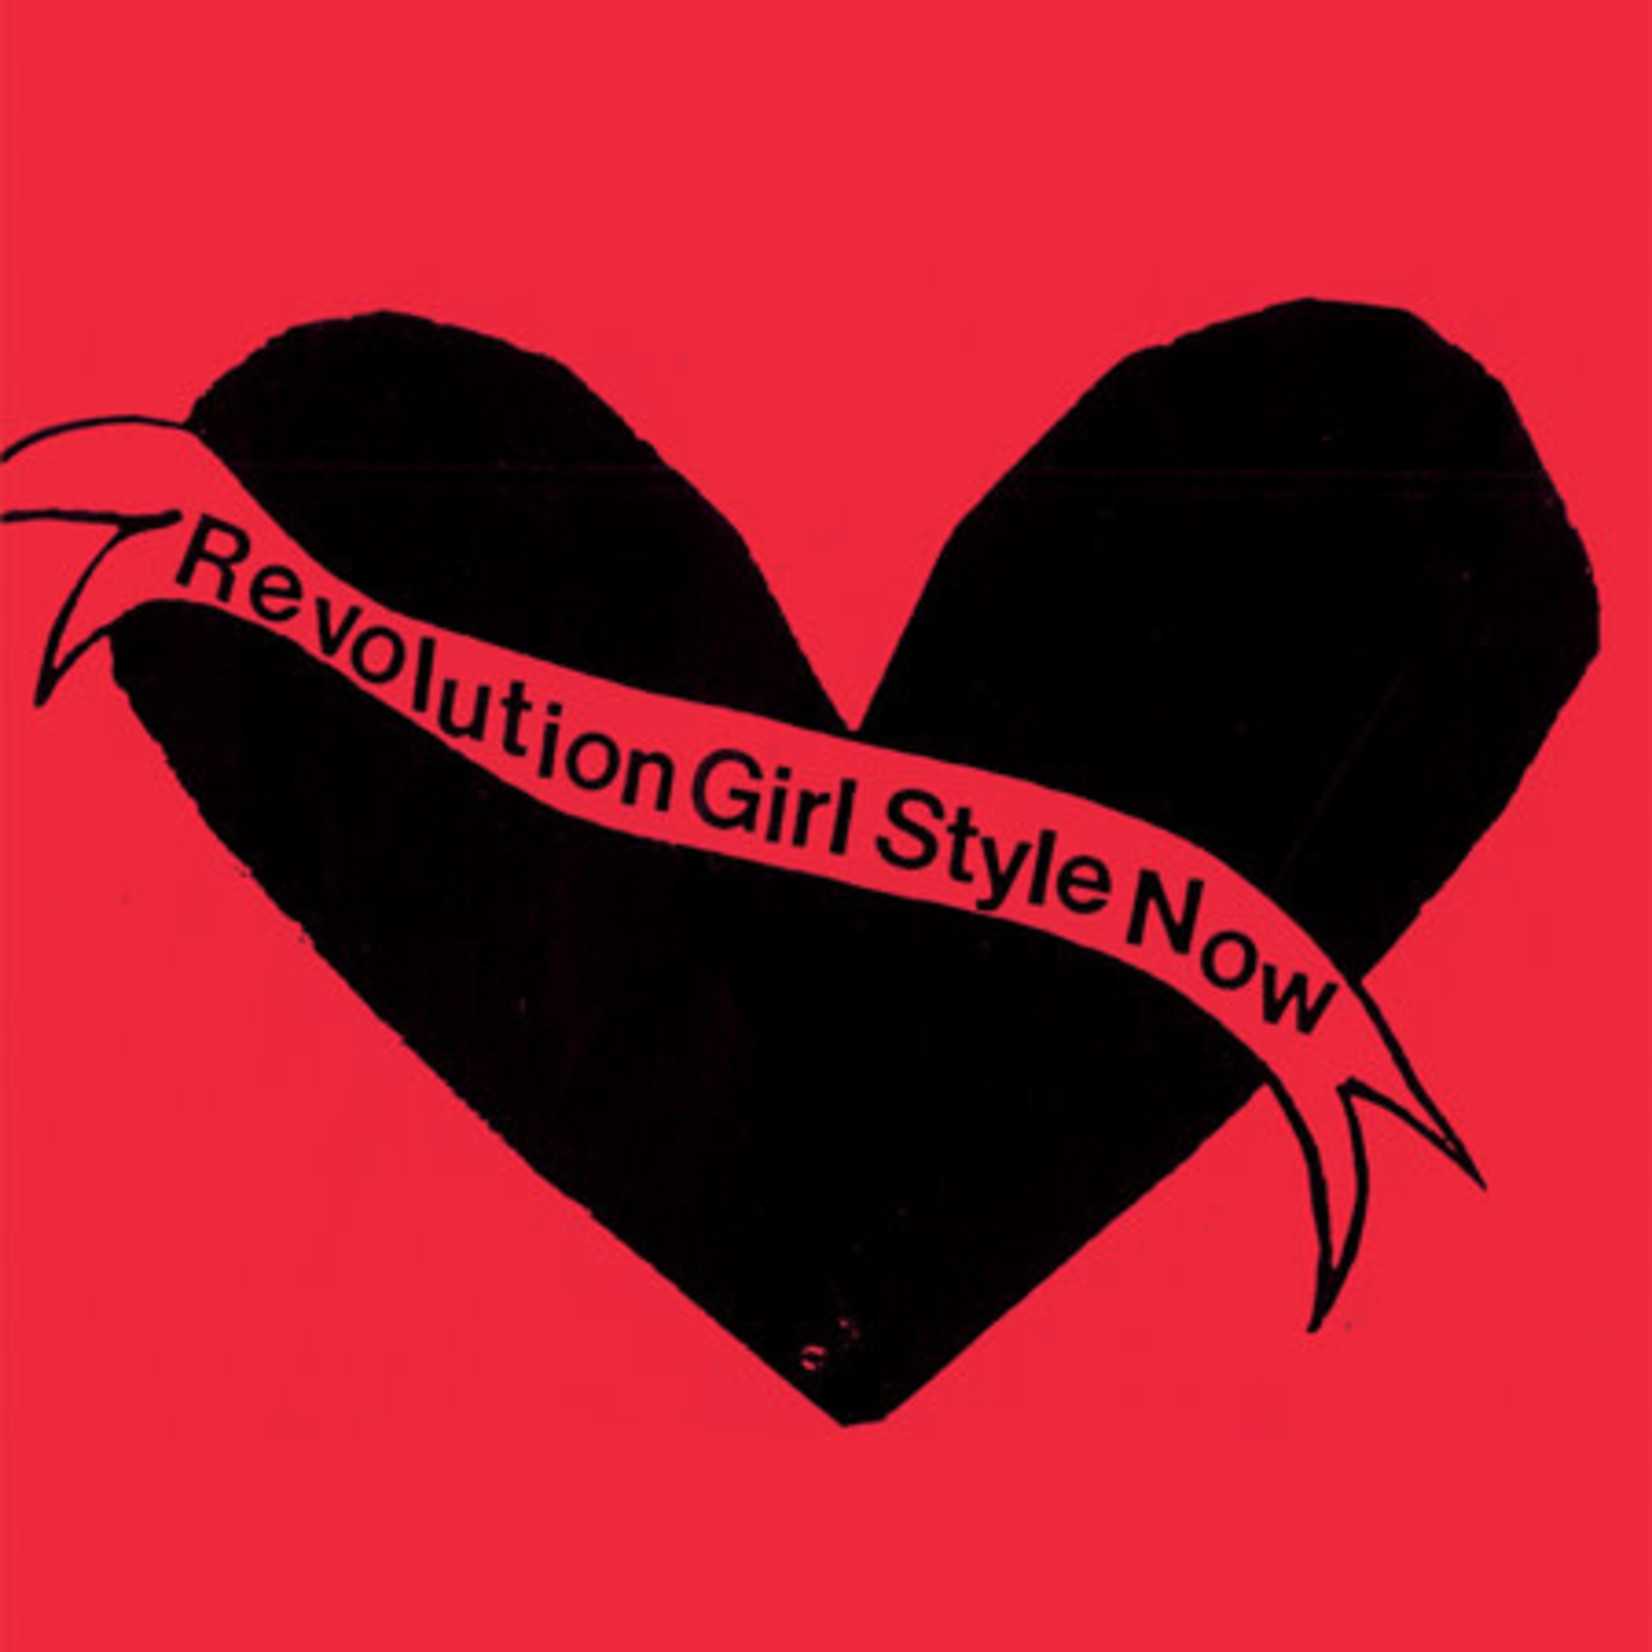 Bikini Kill - Revolution Girl Style Now (Tape)